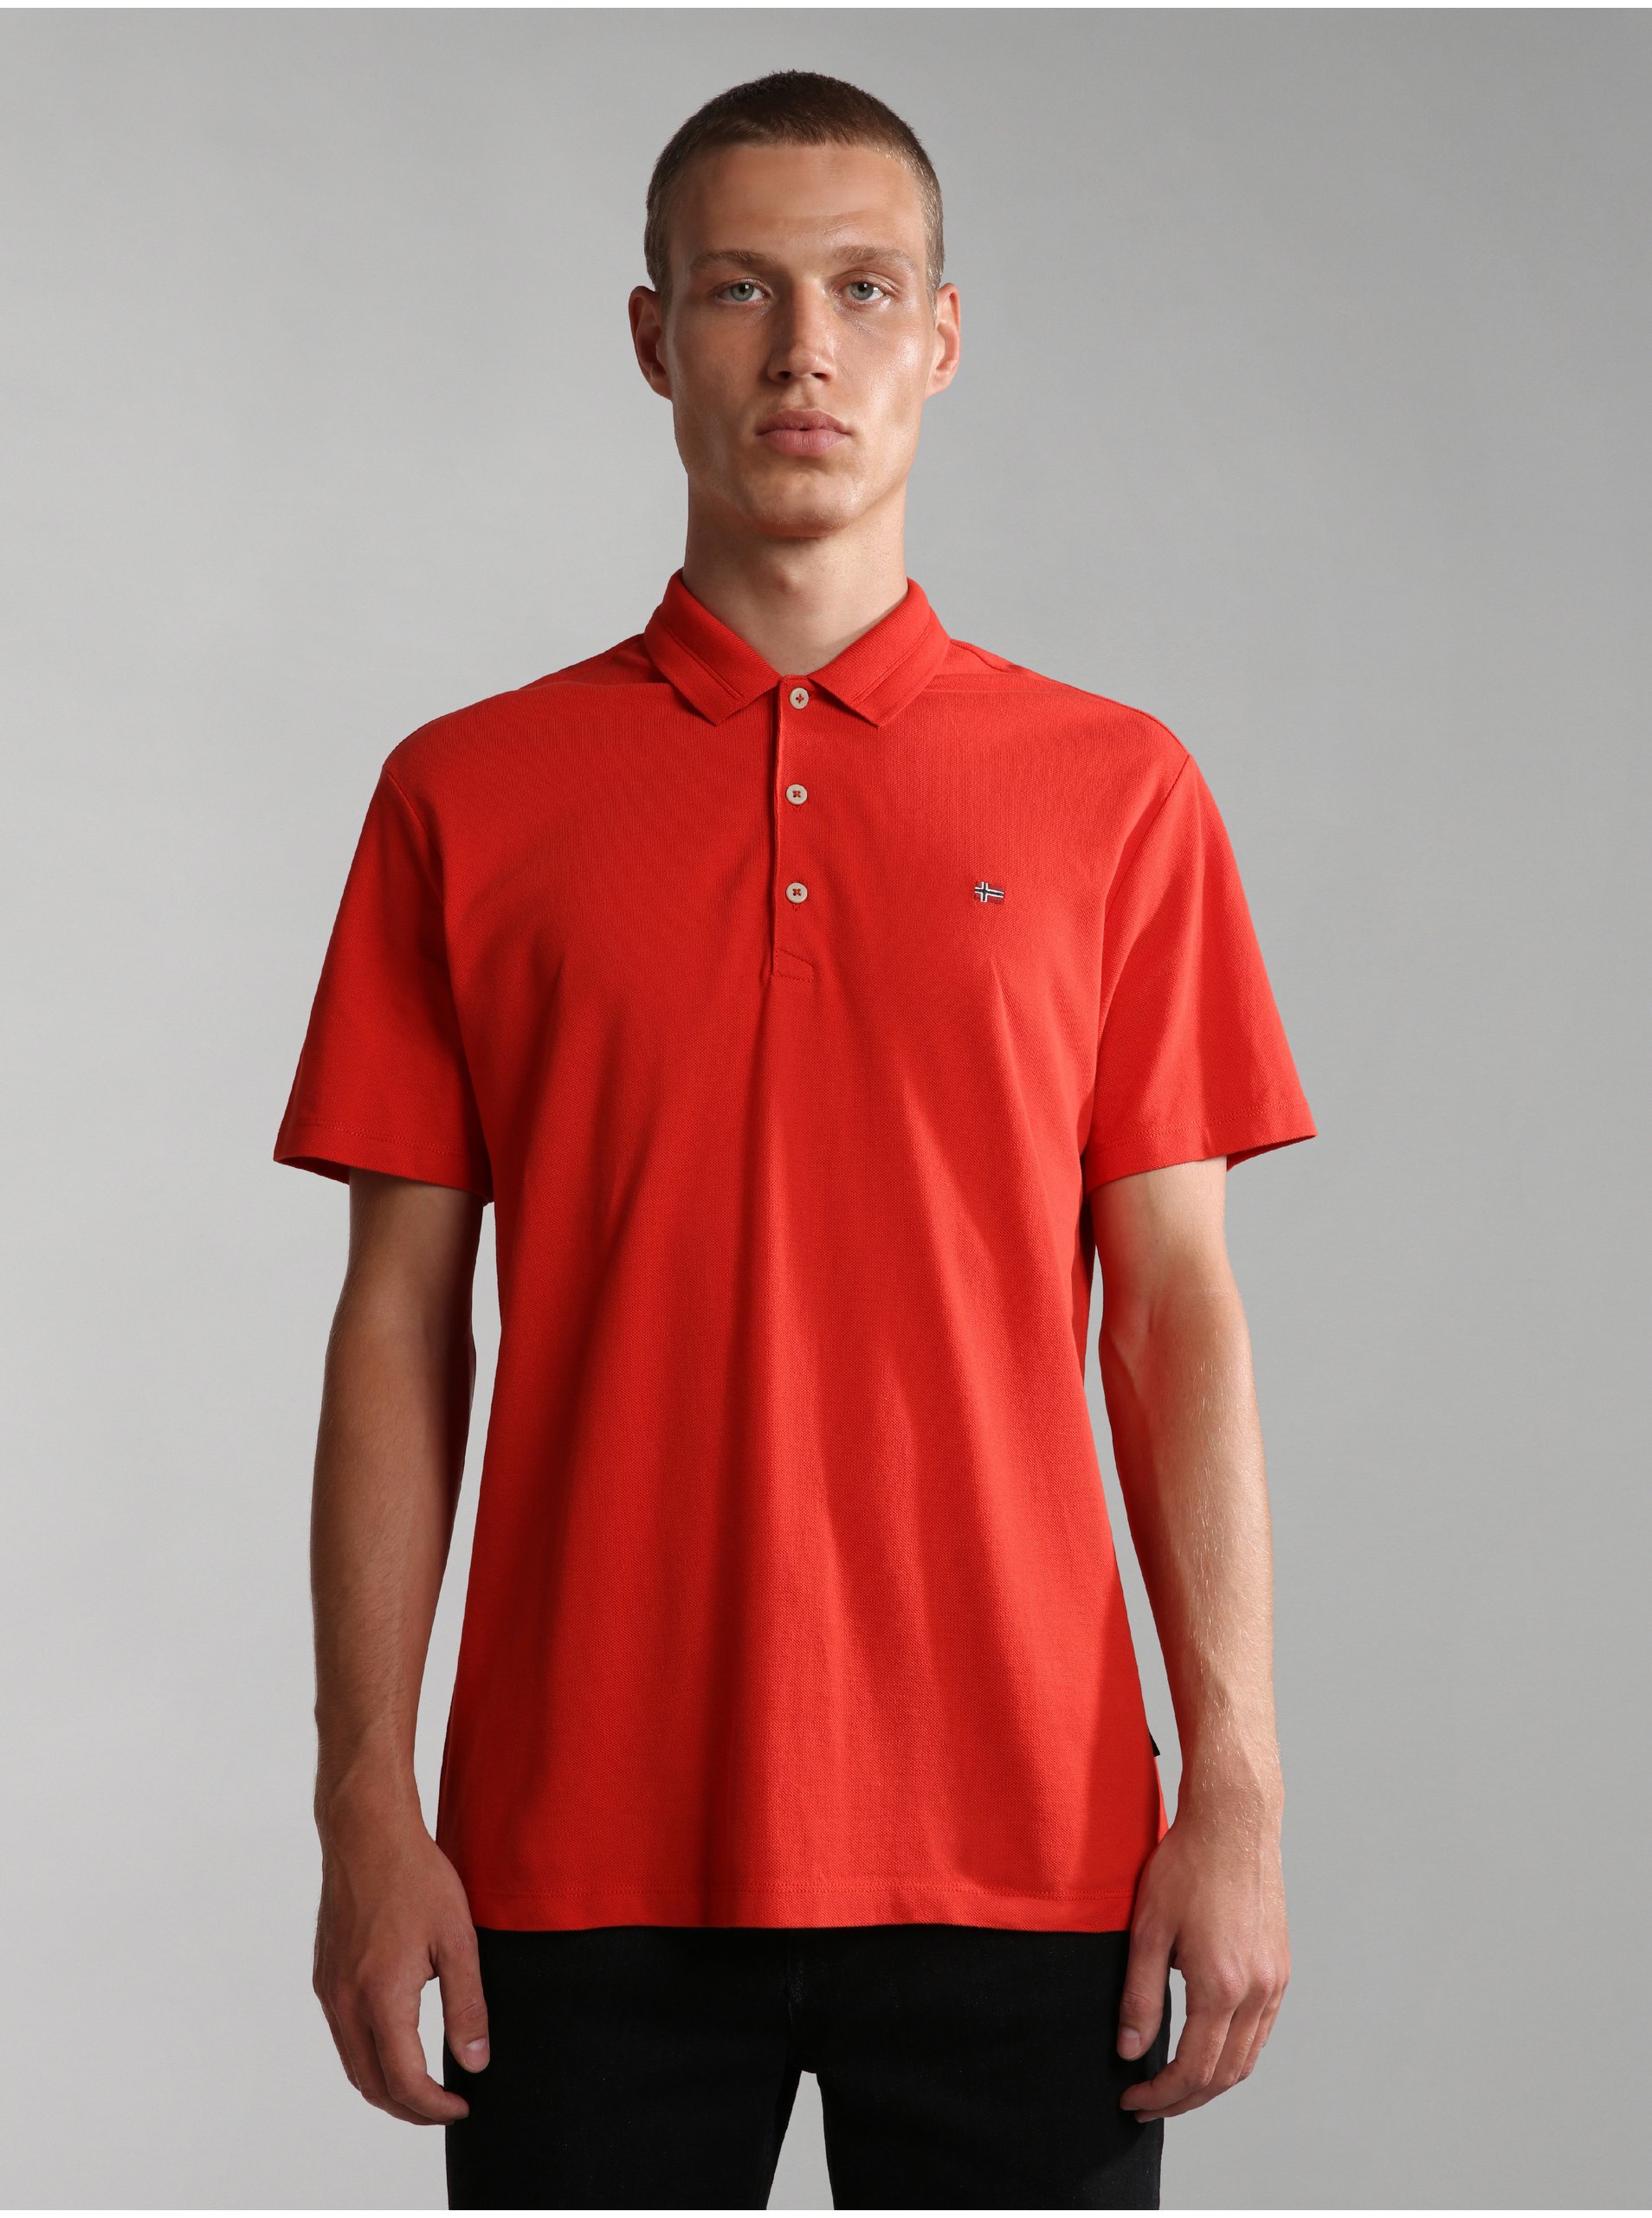 Red Men's Polo T-Shirt NAPAPIJRI - Men's